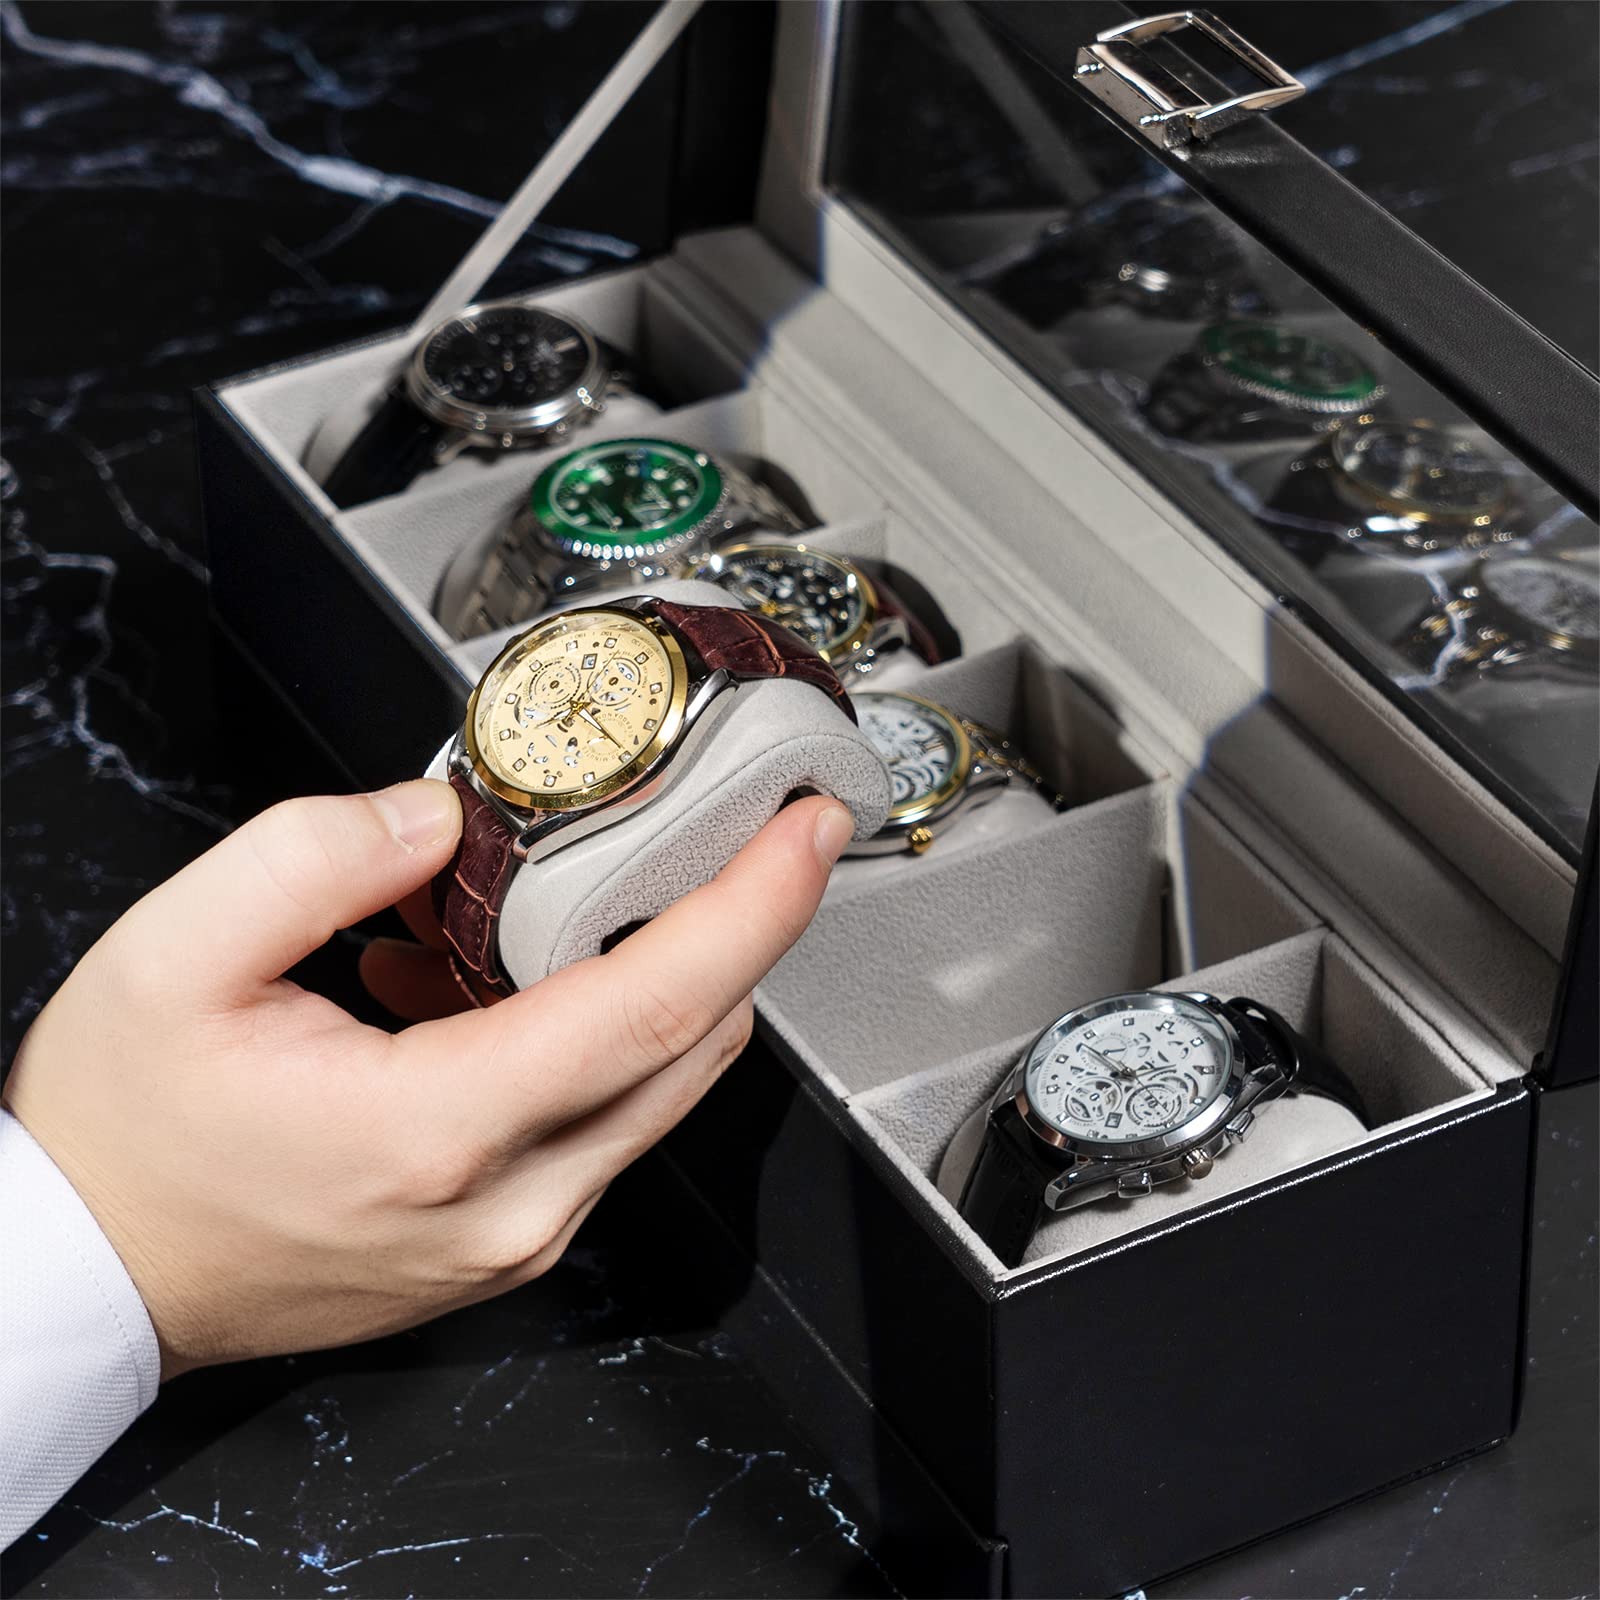 ProCase 6 Slot Watch Box Bundle with 20 Slots Lacquered Finish Watch Box